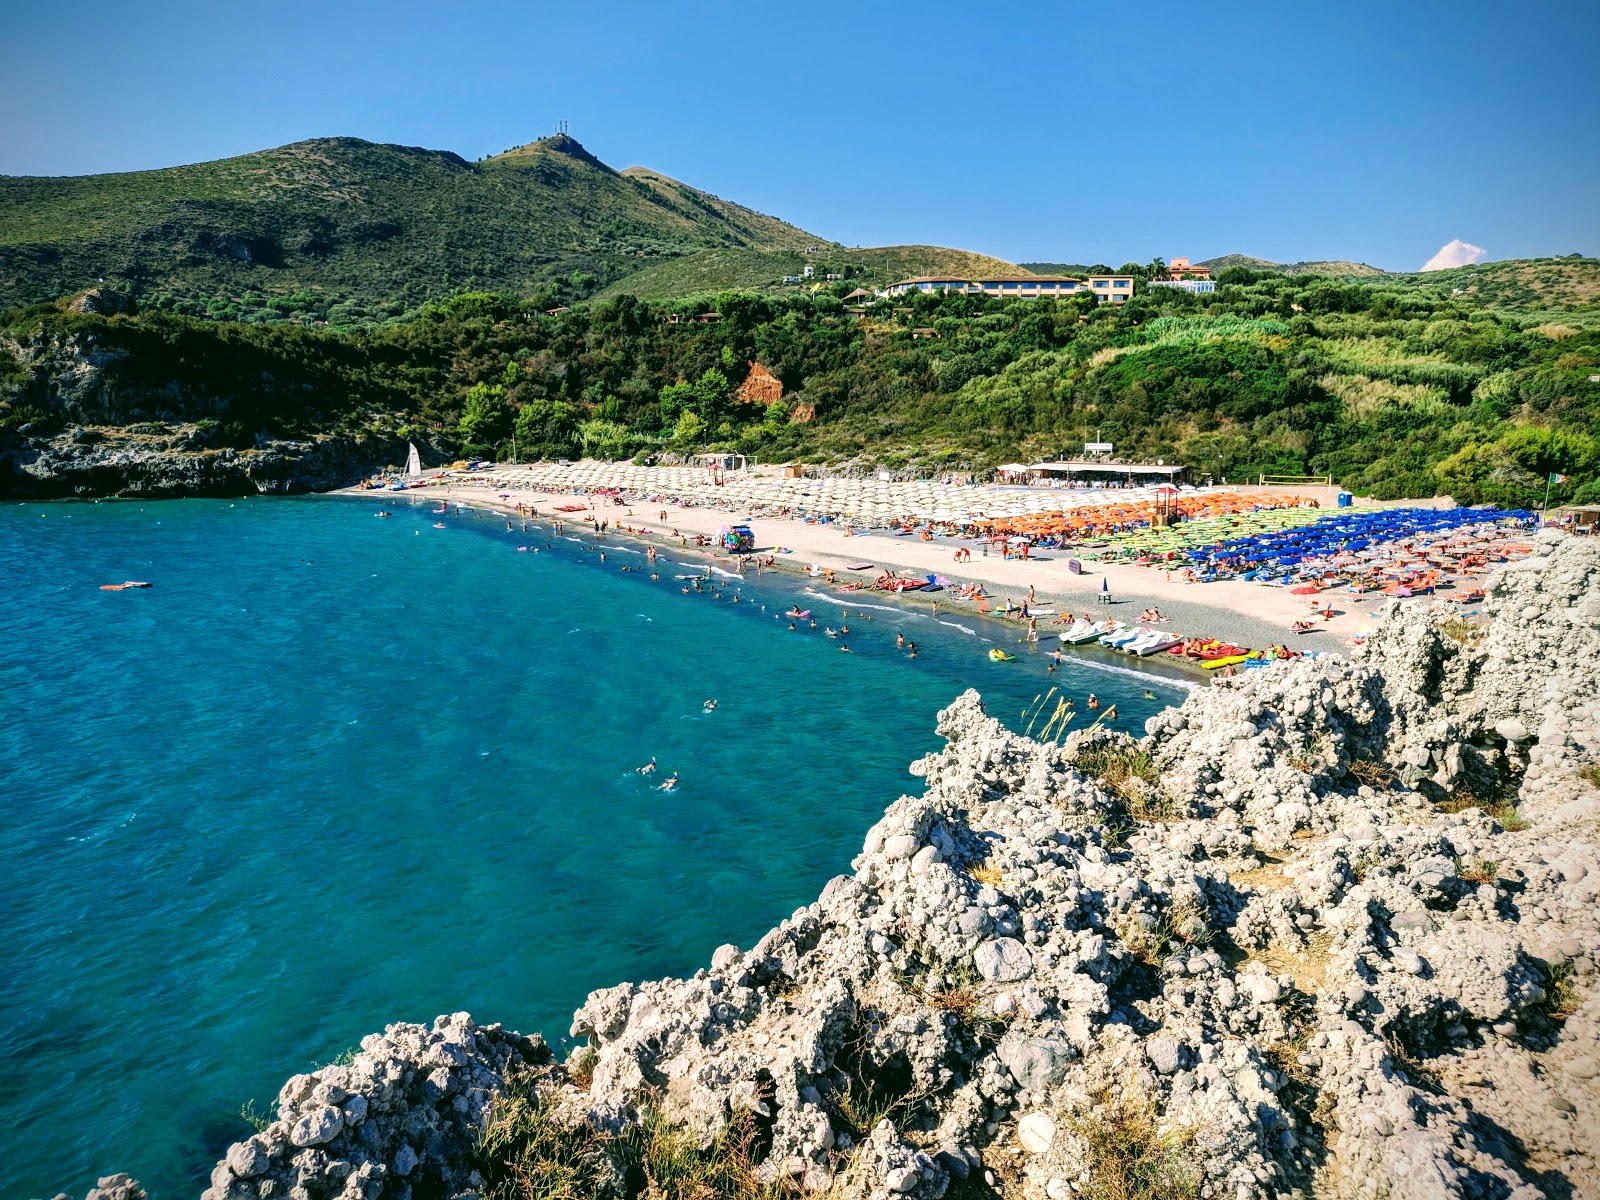 Foto av Spiaggia di Capogrosso med brunsand yta